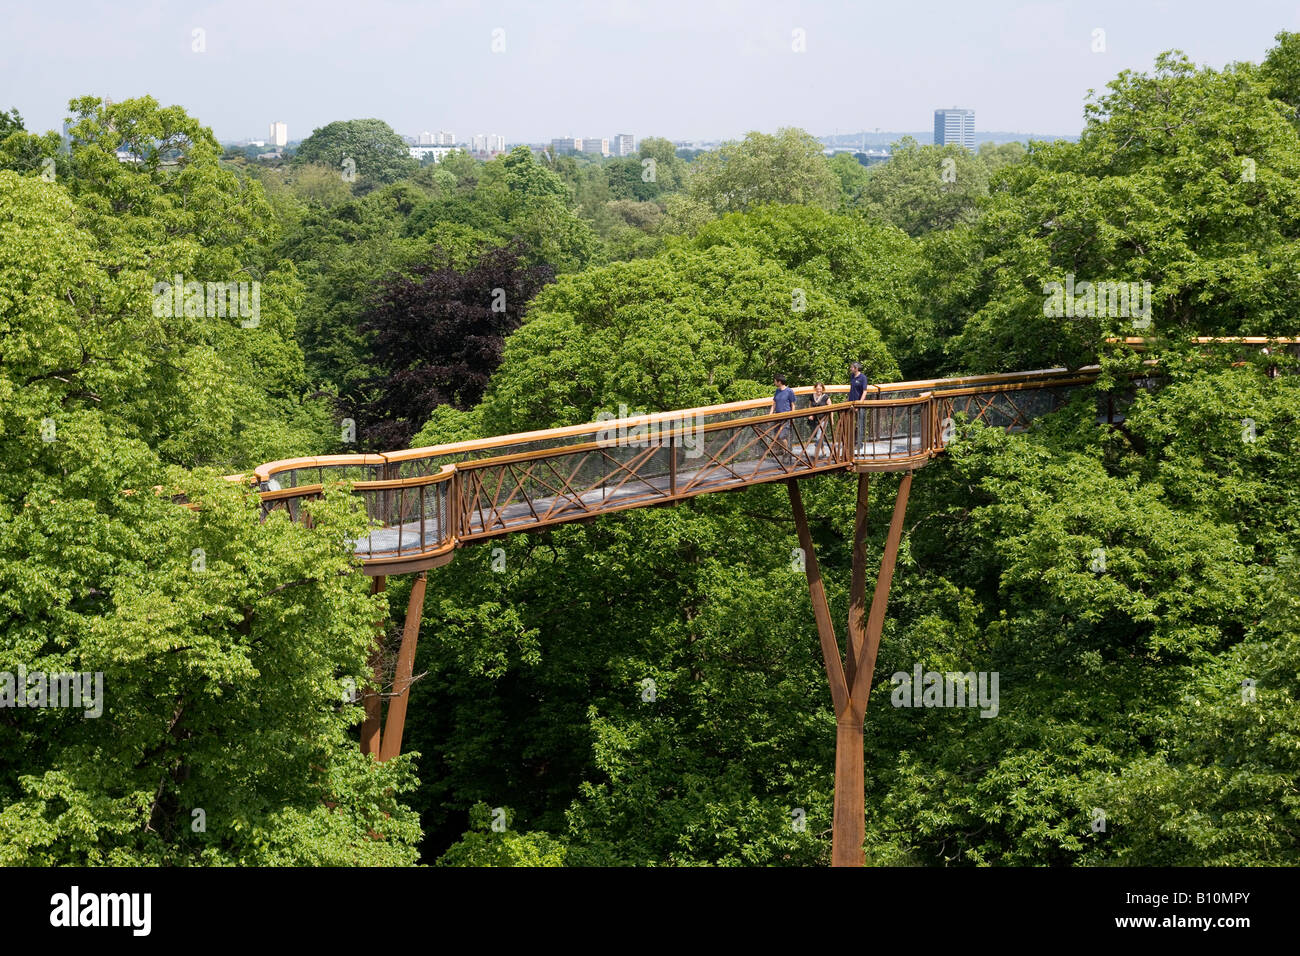 Xstrata Treetop Walkway, Royal Botanic Gardens, Kew. Arquitecto: Marks Barfield Architects Foto de stock